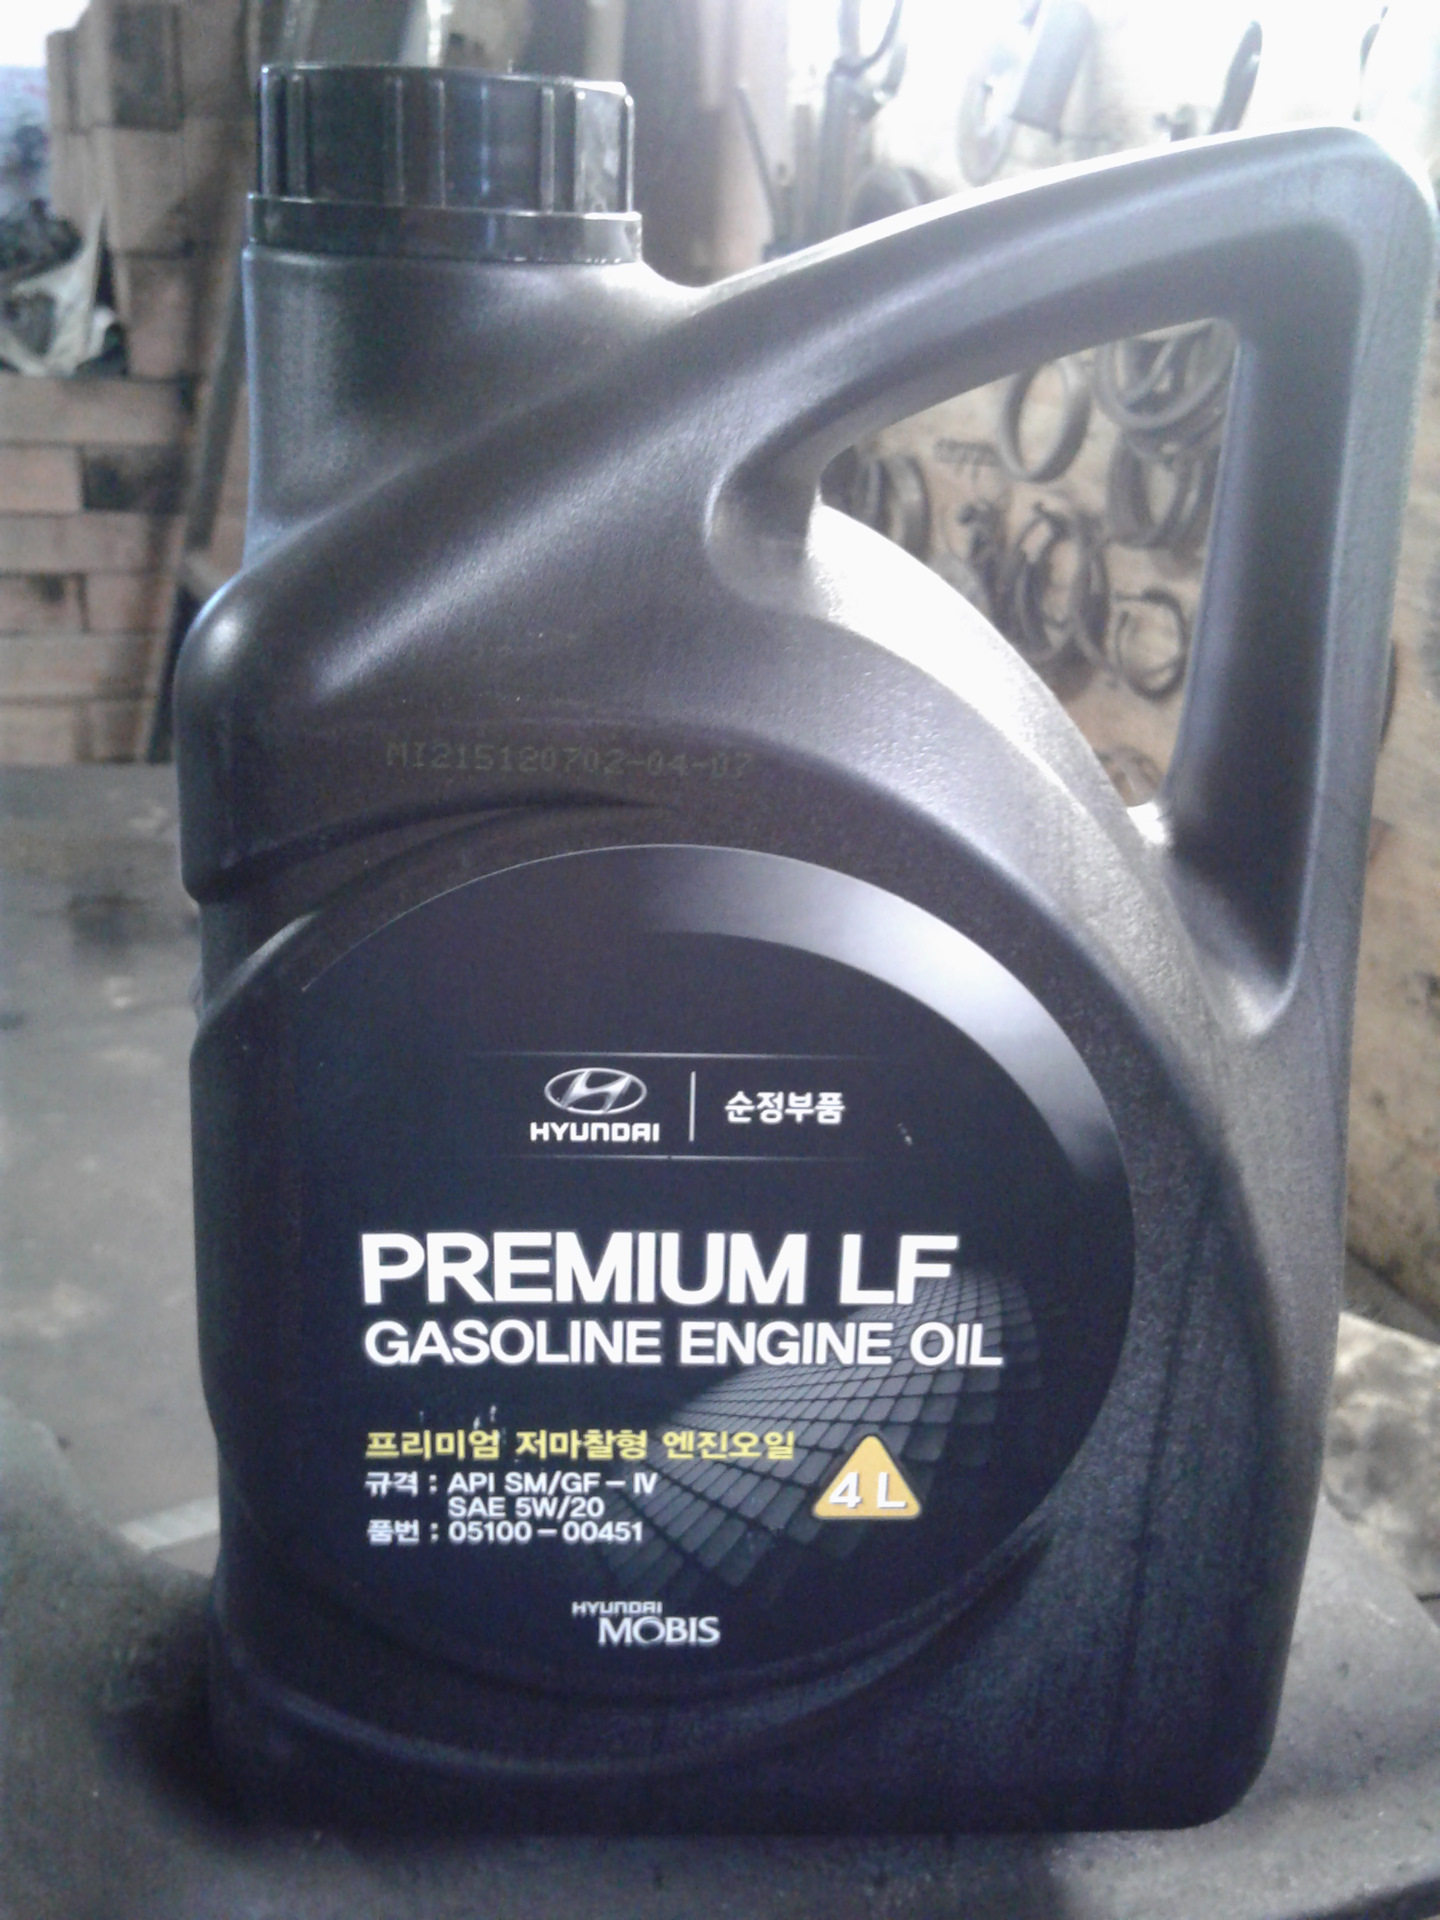 Масла премиум класса. Mobis Premium gasoline 5w-20. 0510000451 Hyundai/Kia. Premium LF gasoline SAE 5w-20 (API SM, ILSAC gf-4).. Premium gasoline engine Oil 5w20.